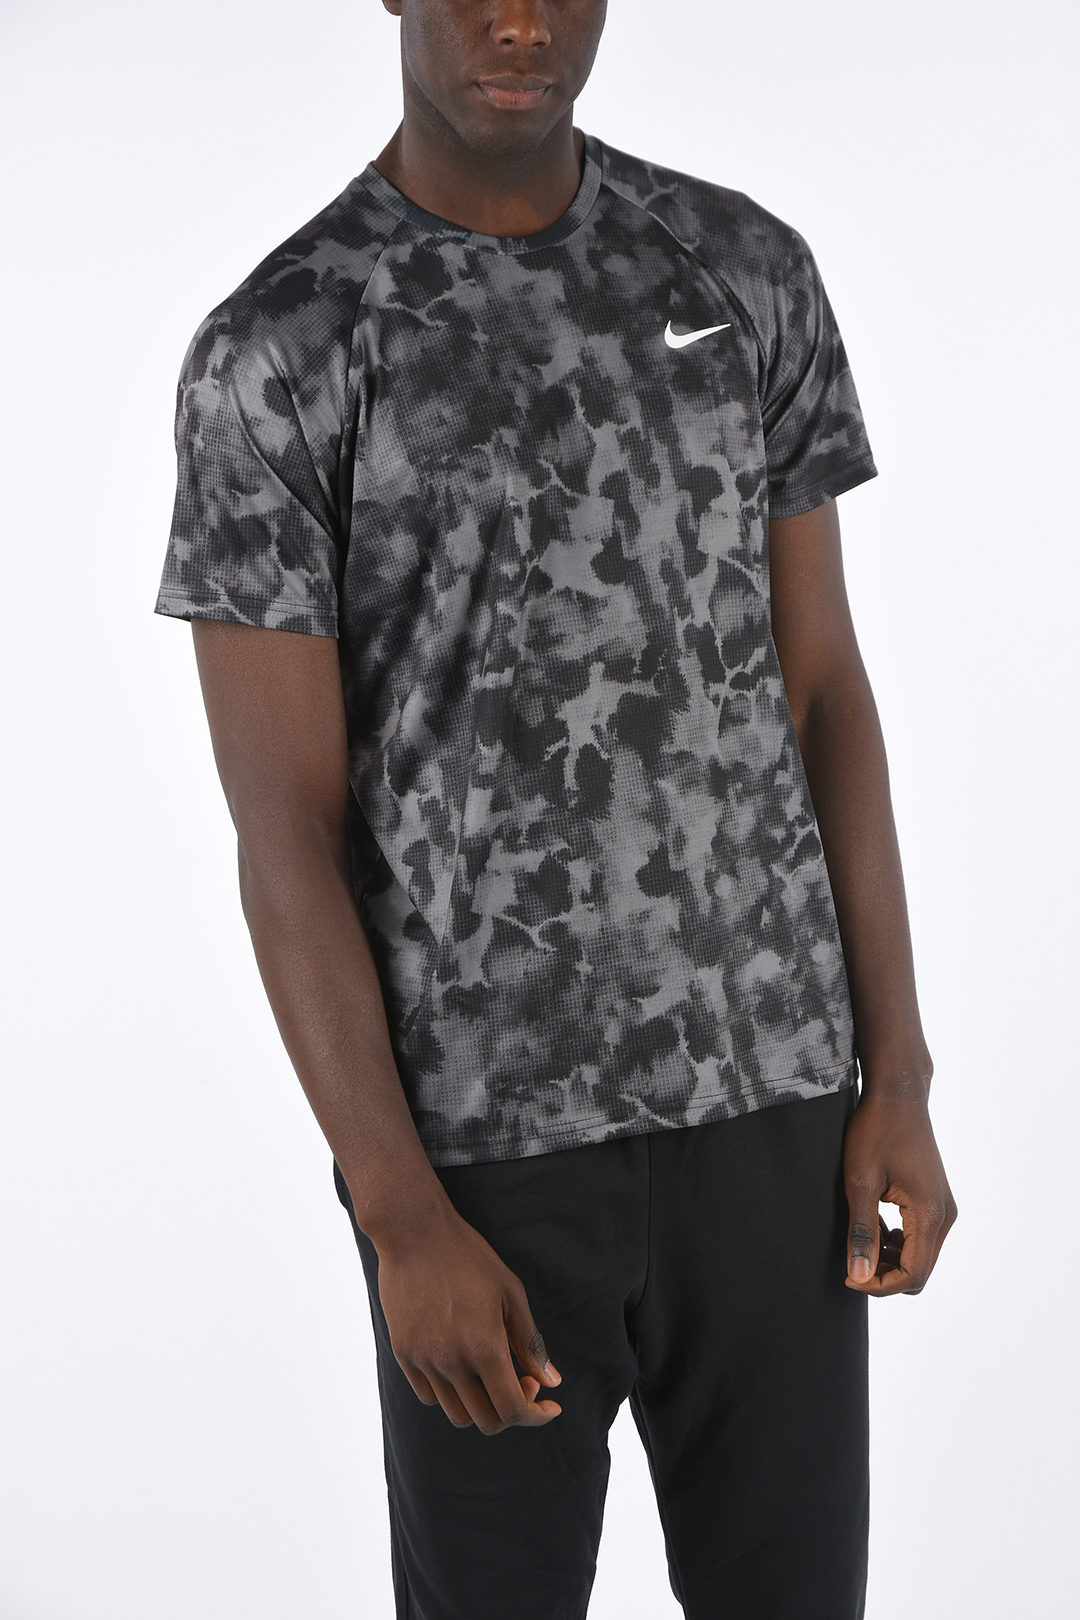 Nike T-shirt - Glamood